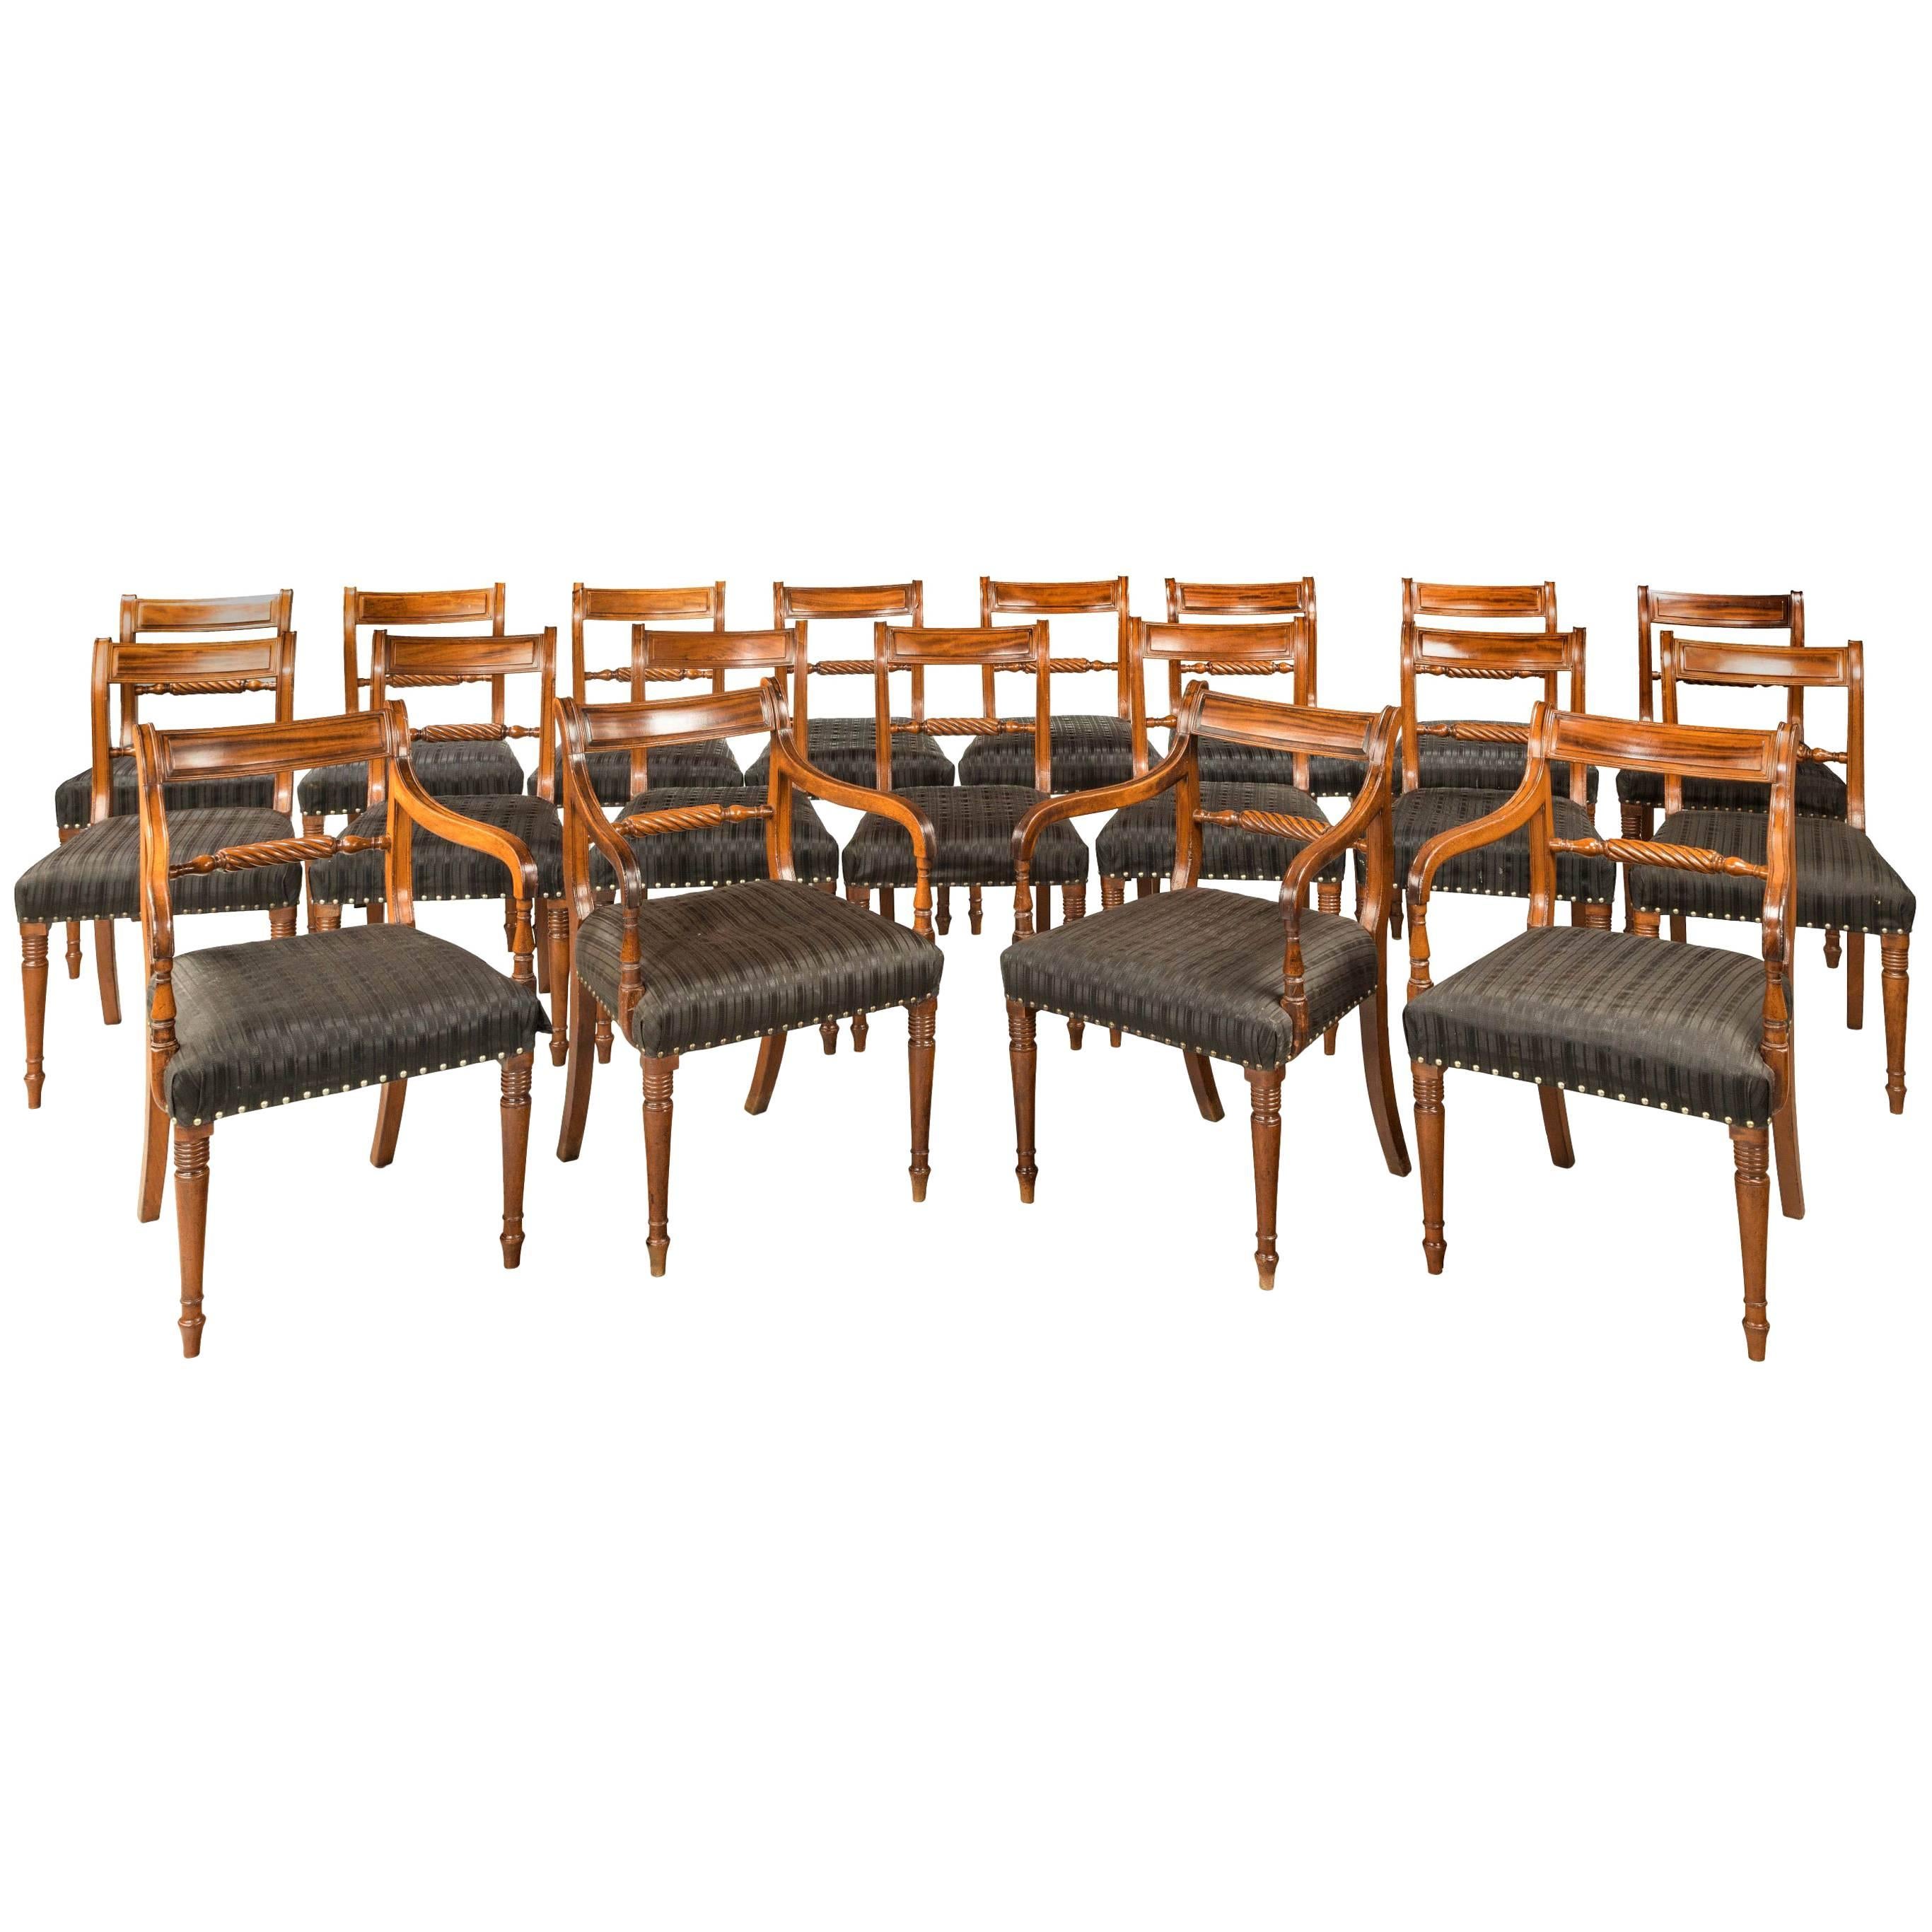 Set of 18 Regency Period Mahogany Framed Chairs